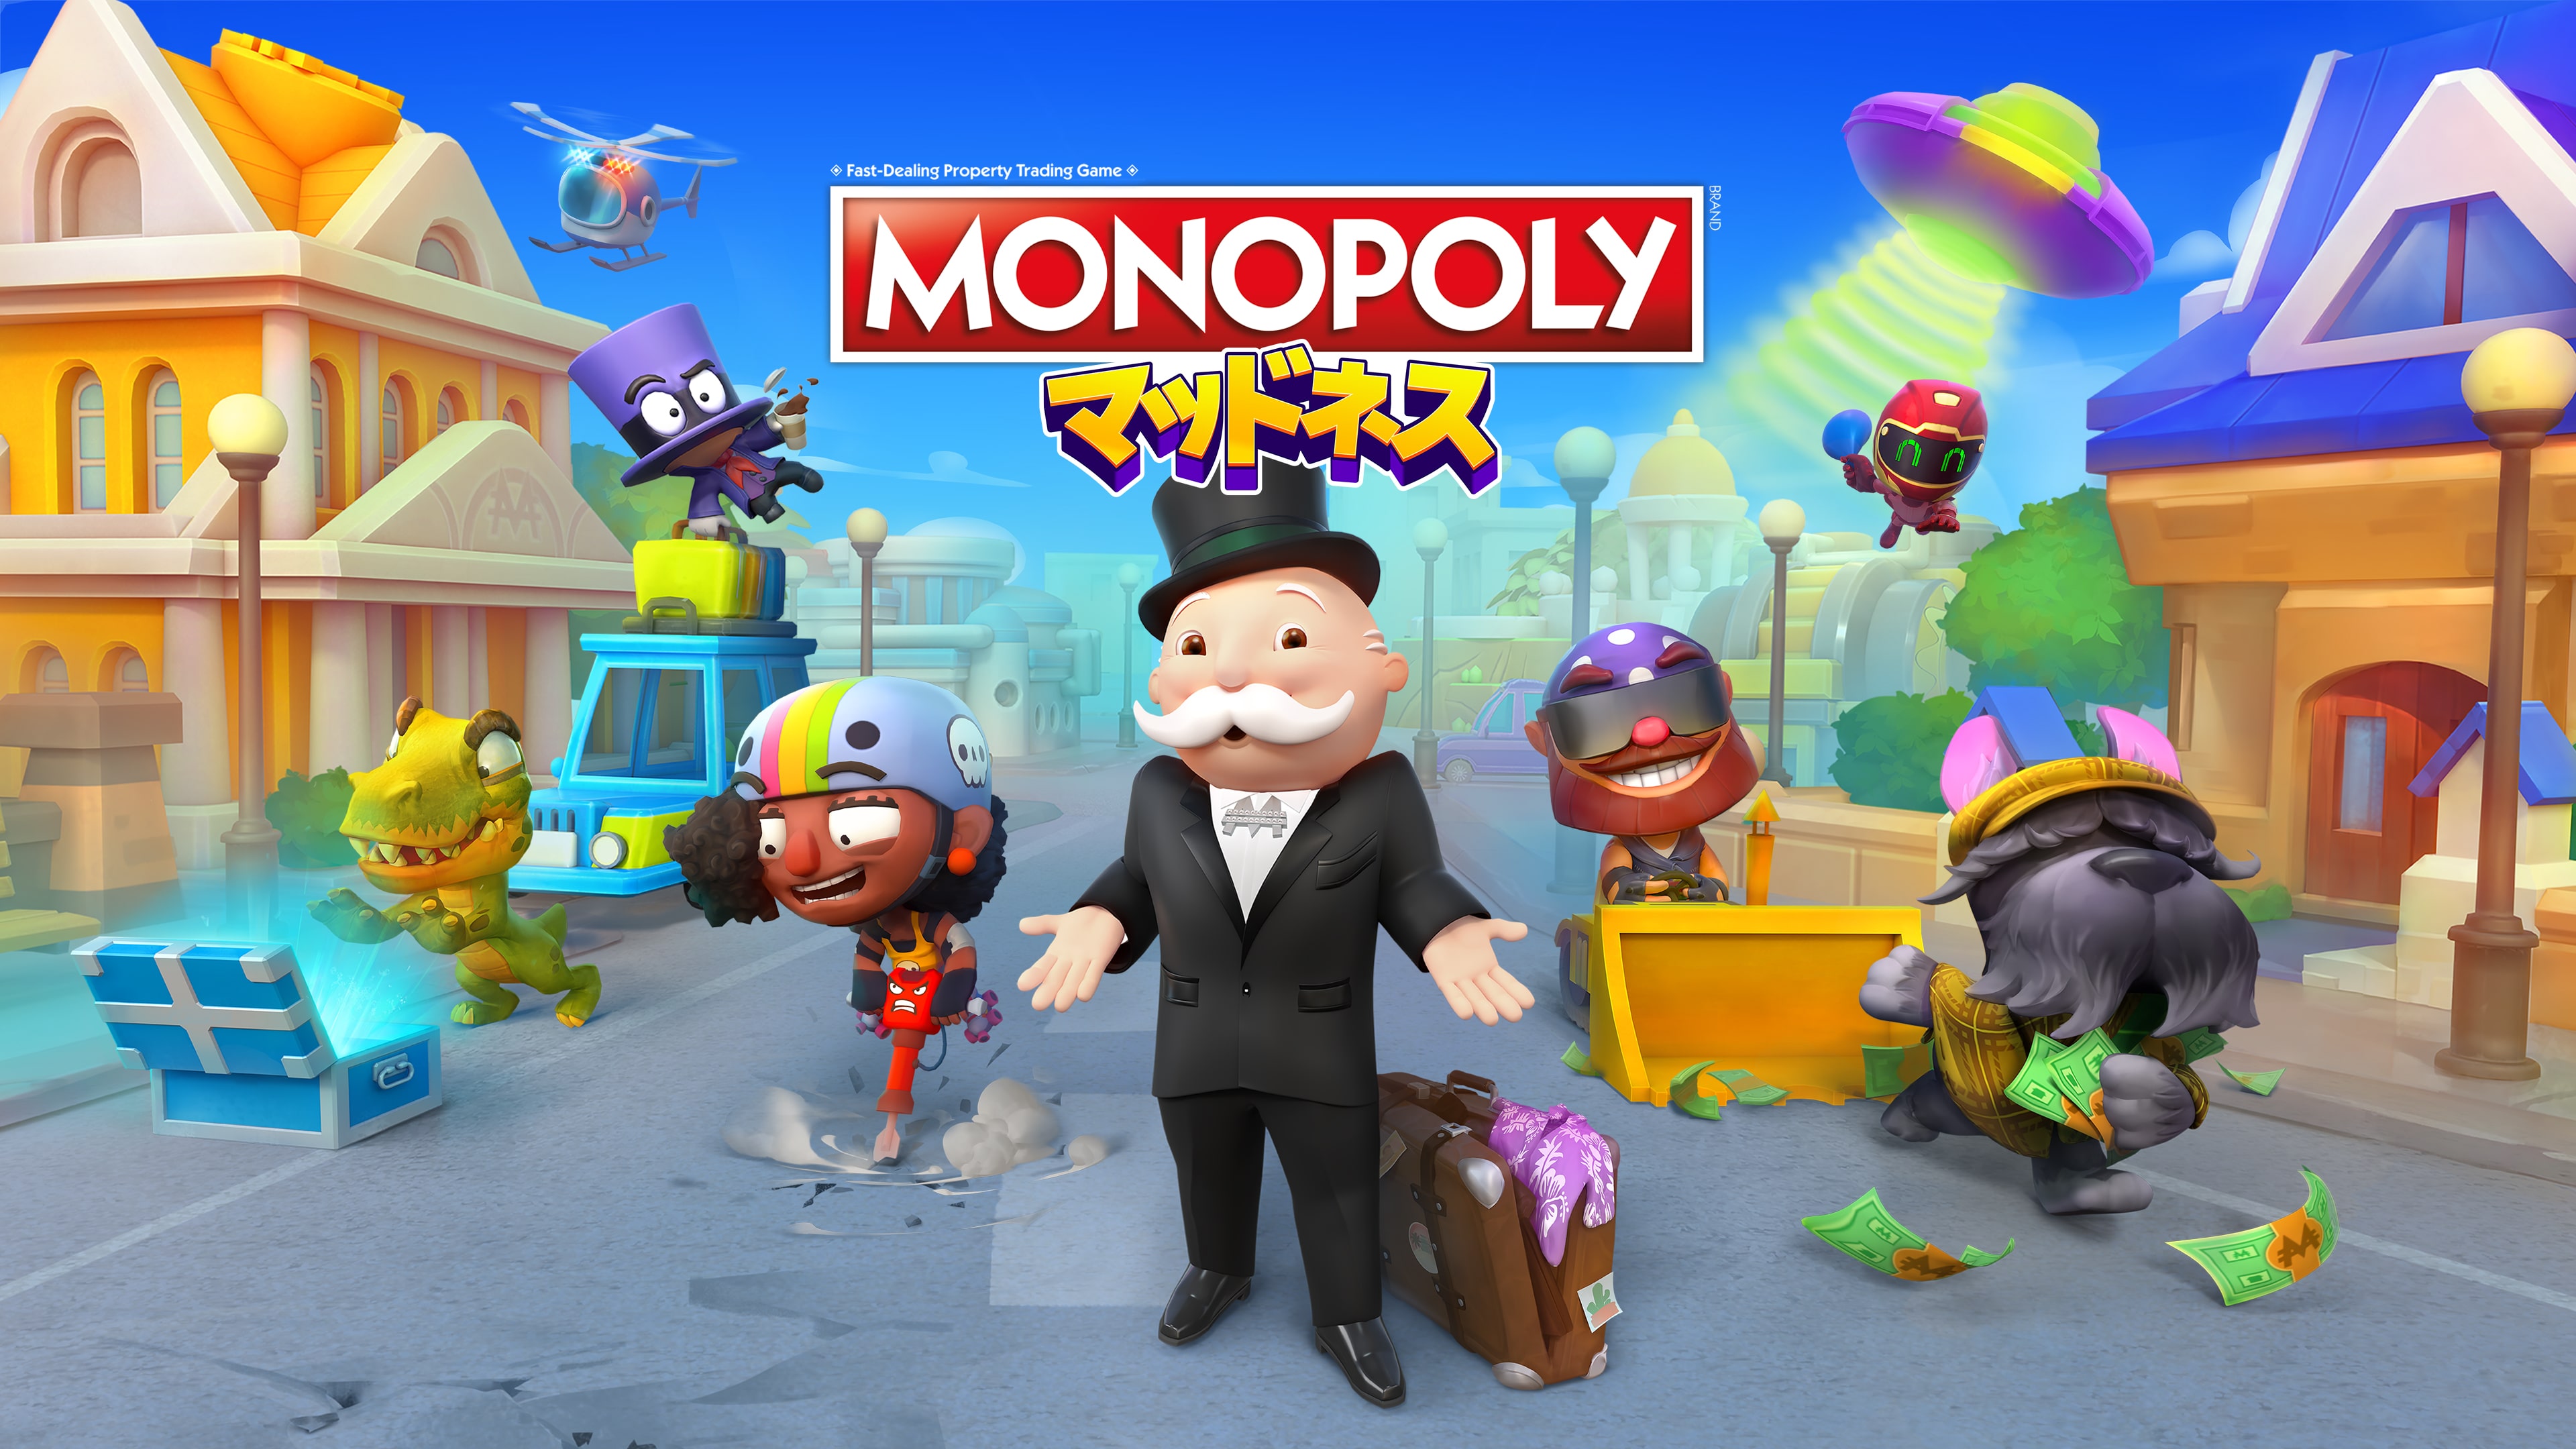 Monopoly マッドネス